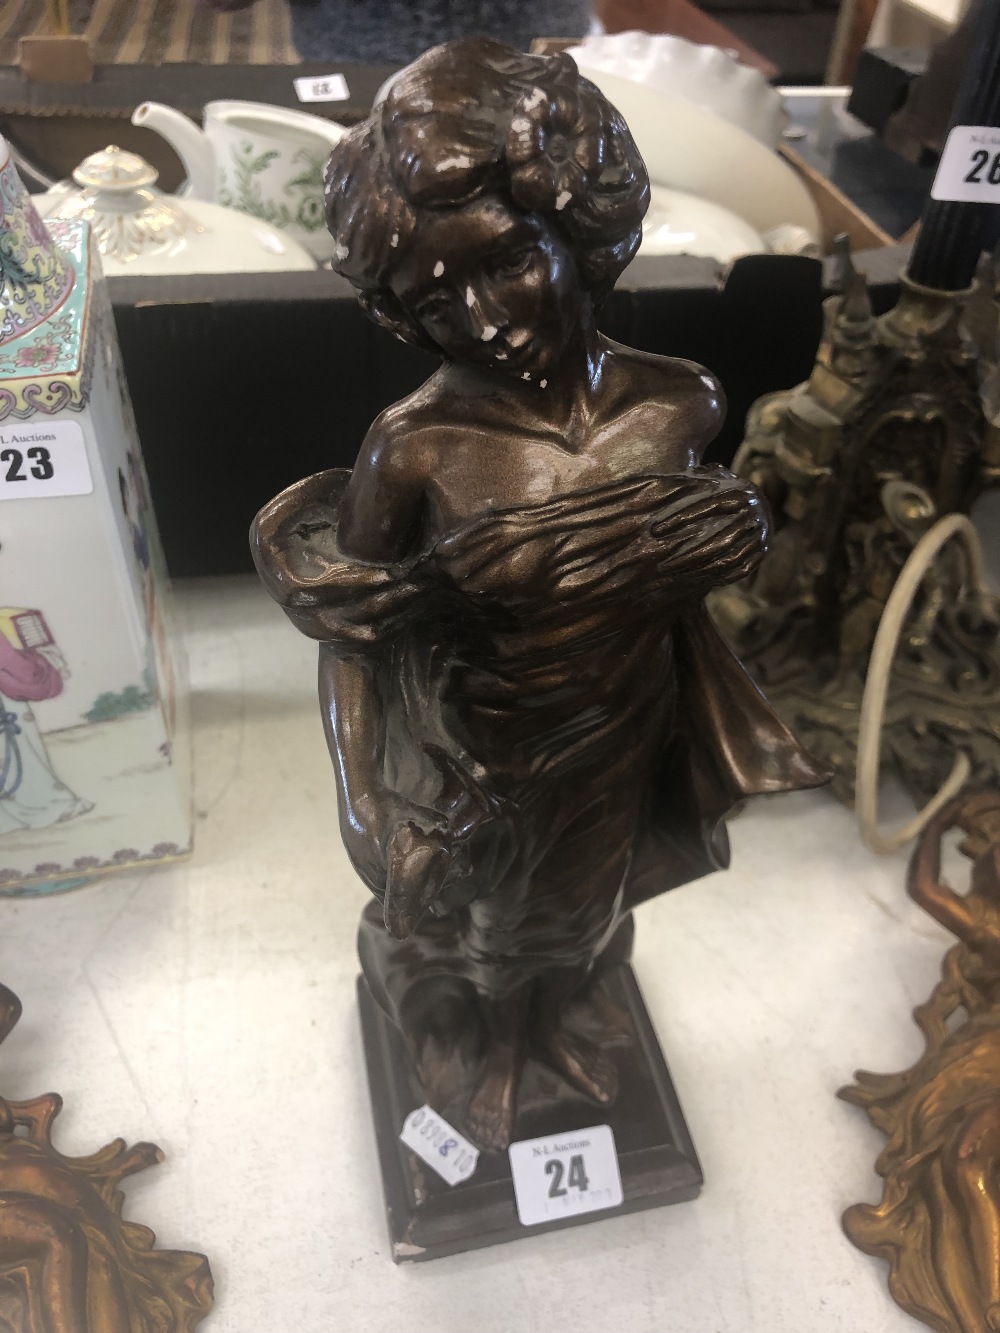 A bronzed figure of a lady